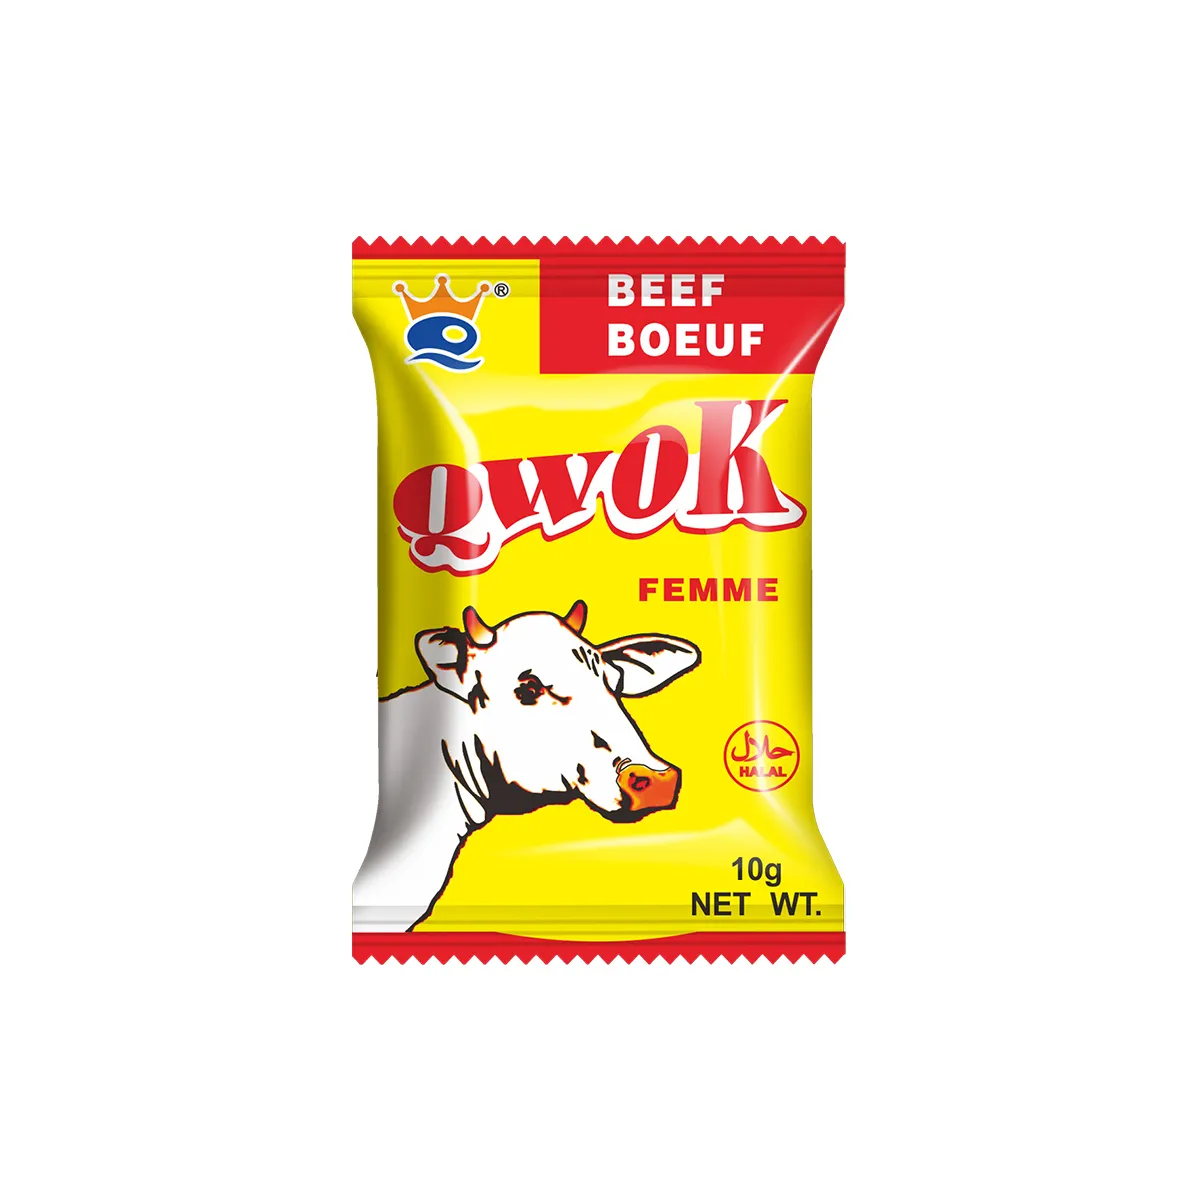 qwok series granular beef essence